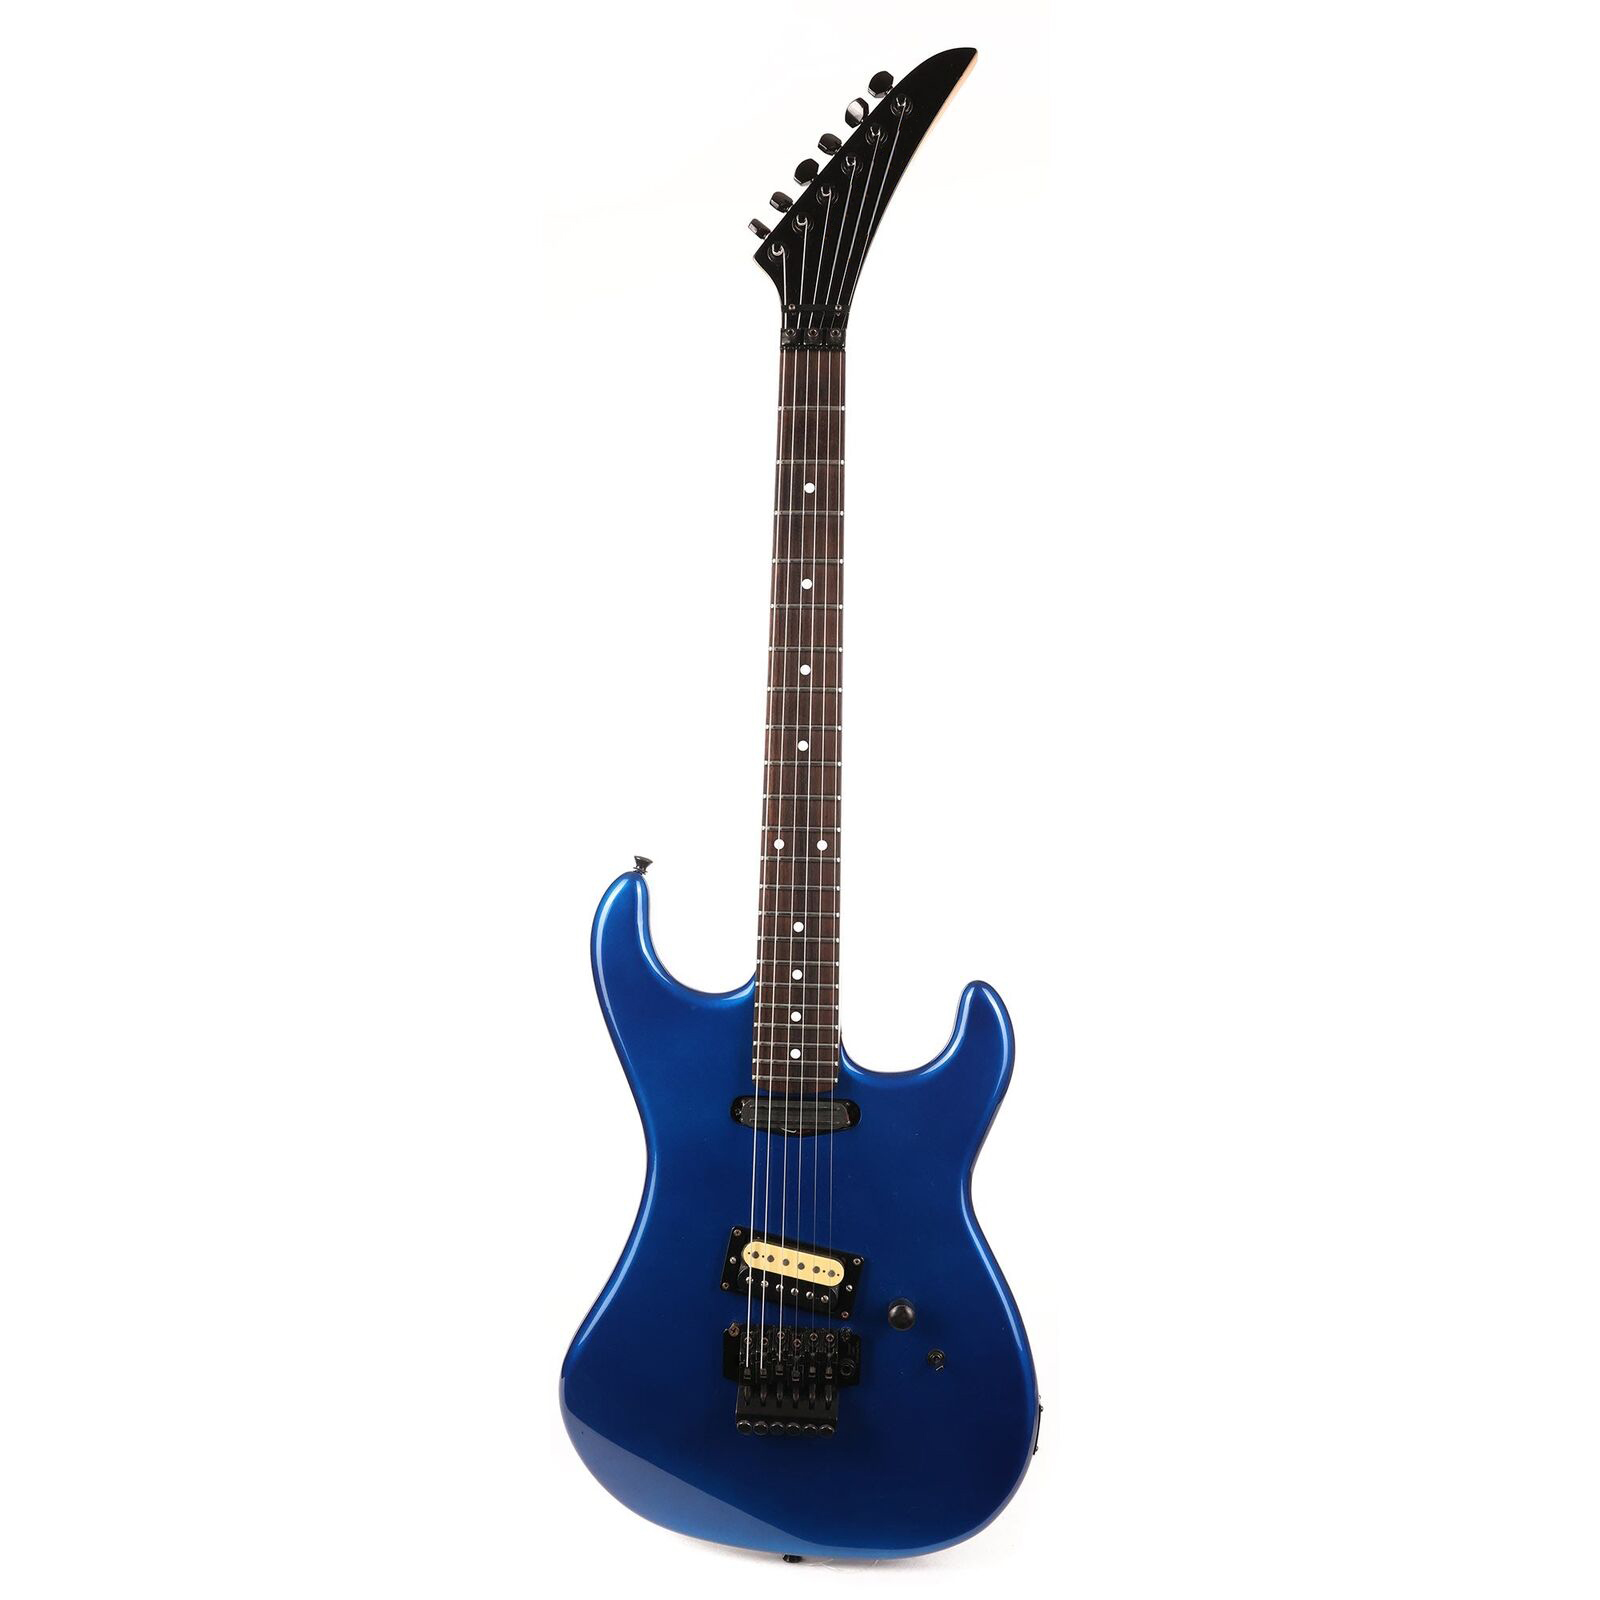 Kr Am er Ek-1bf Candy Blue Electric Guitar jako ta sama na zdjęciach